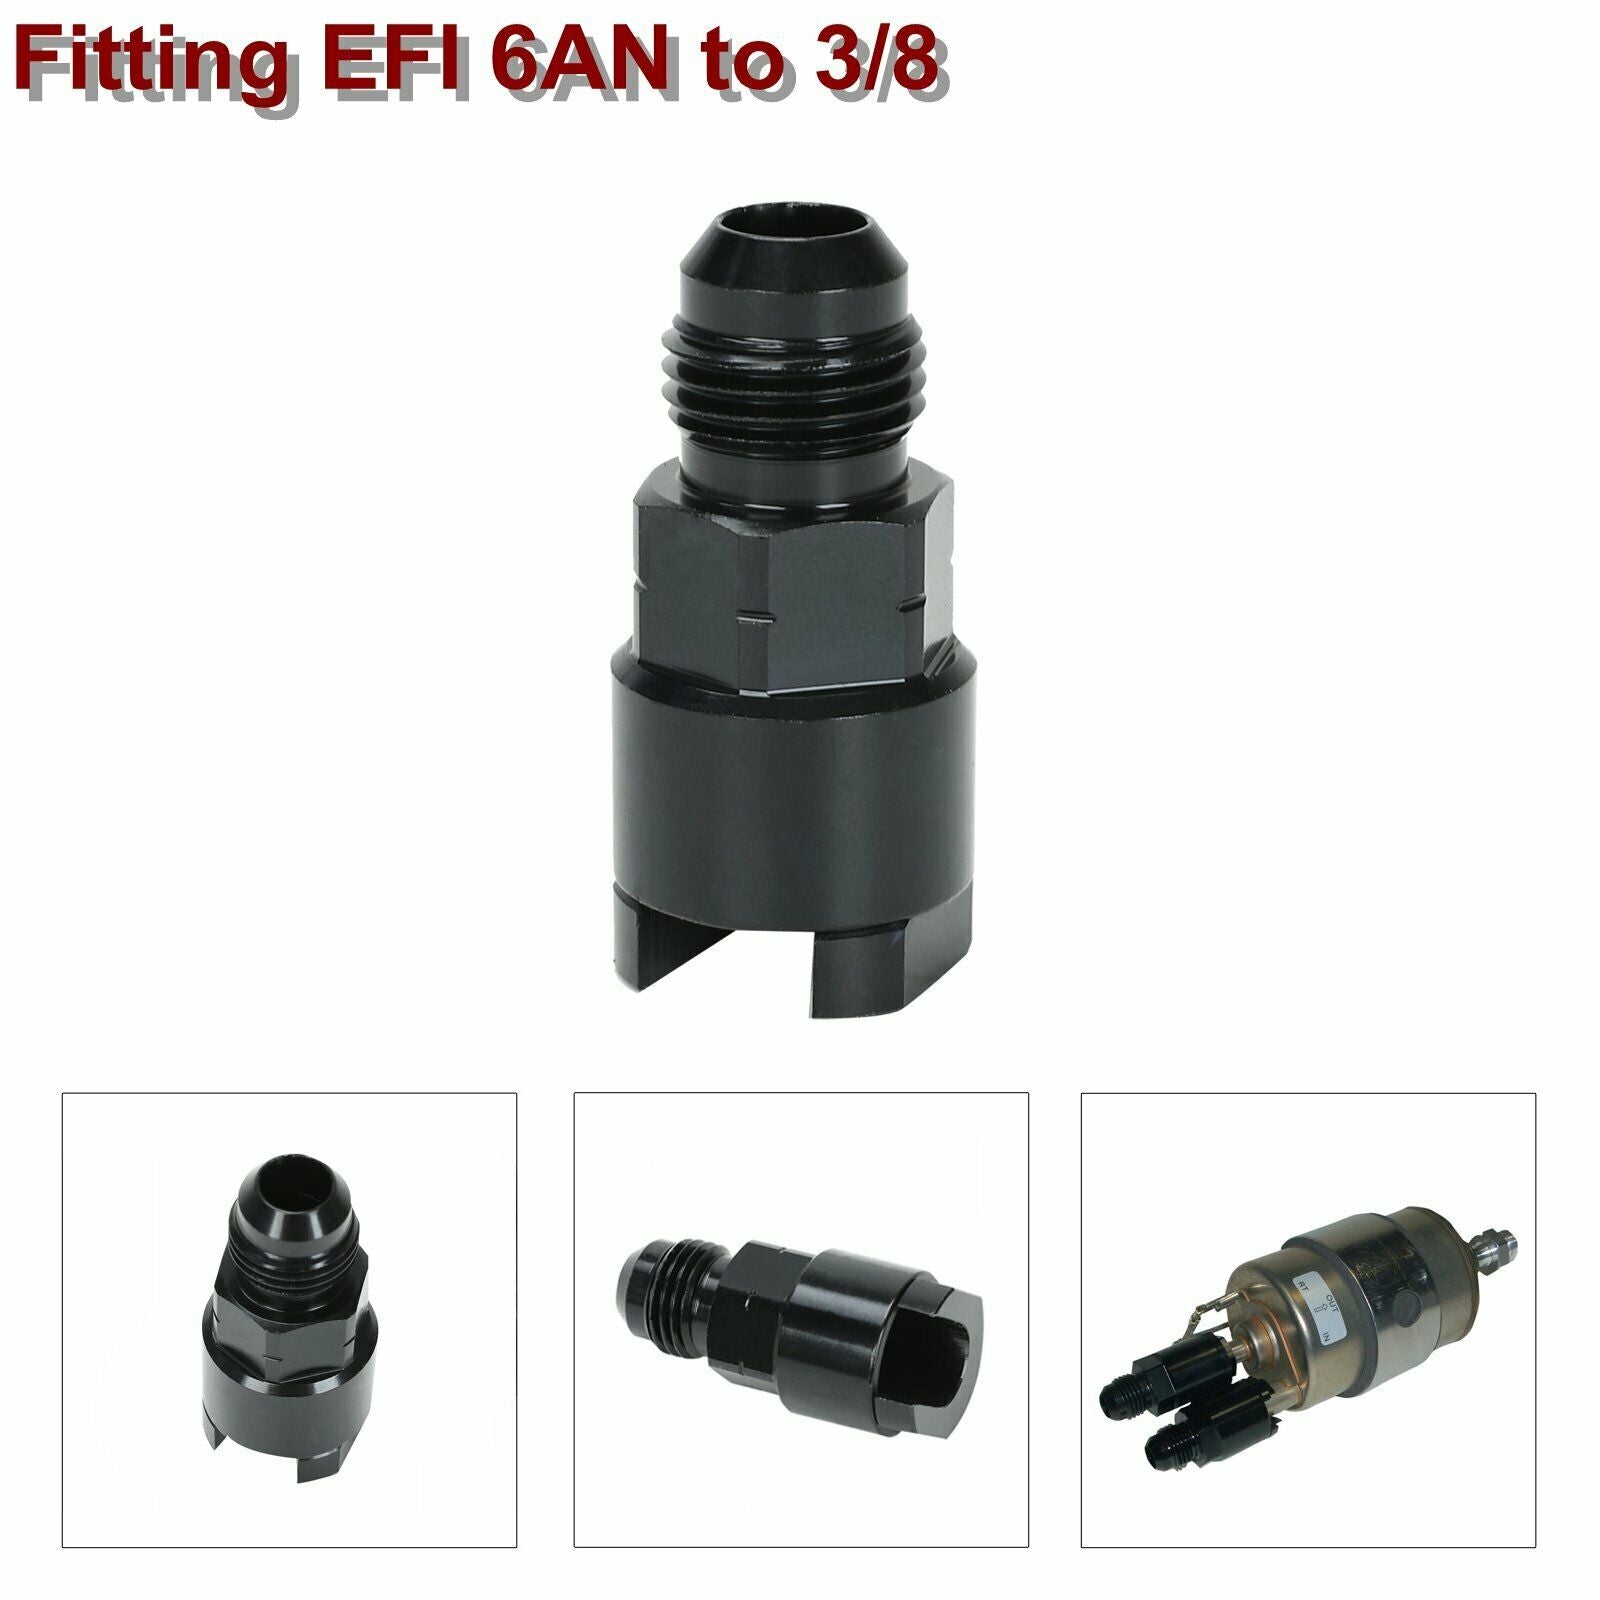 20FT AN6 6AN Stainless Steel Teflon/PTFE Fuel Line Black Fitting E85 Ethanol